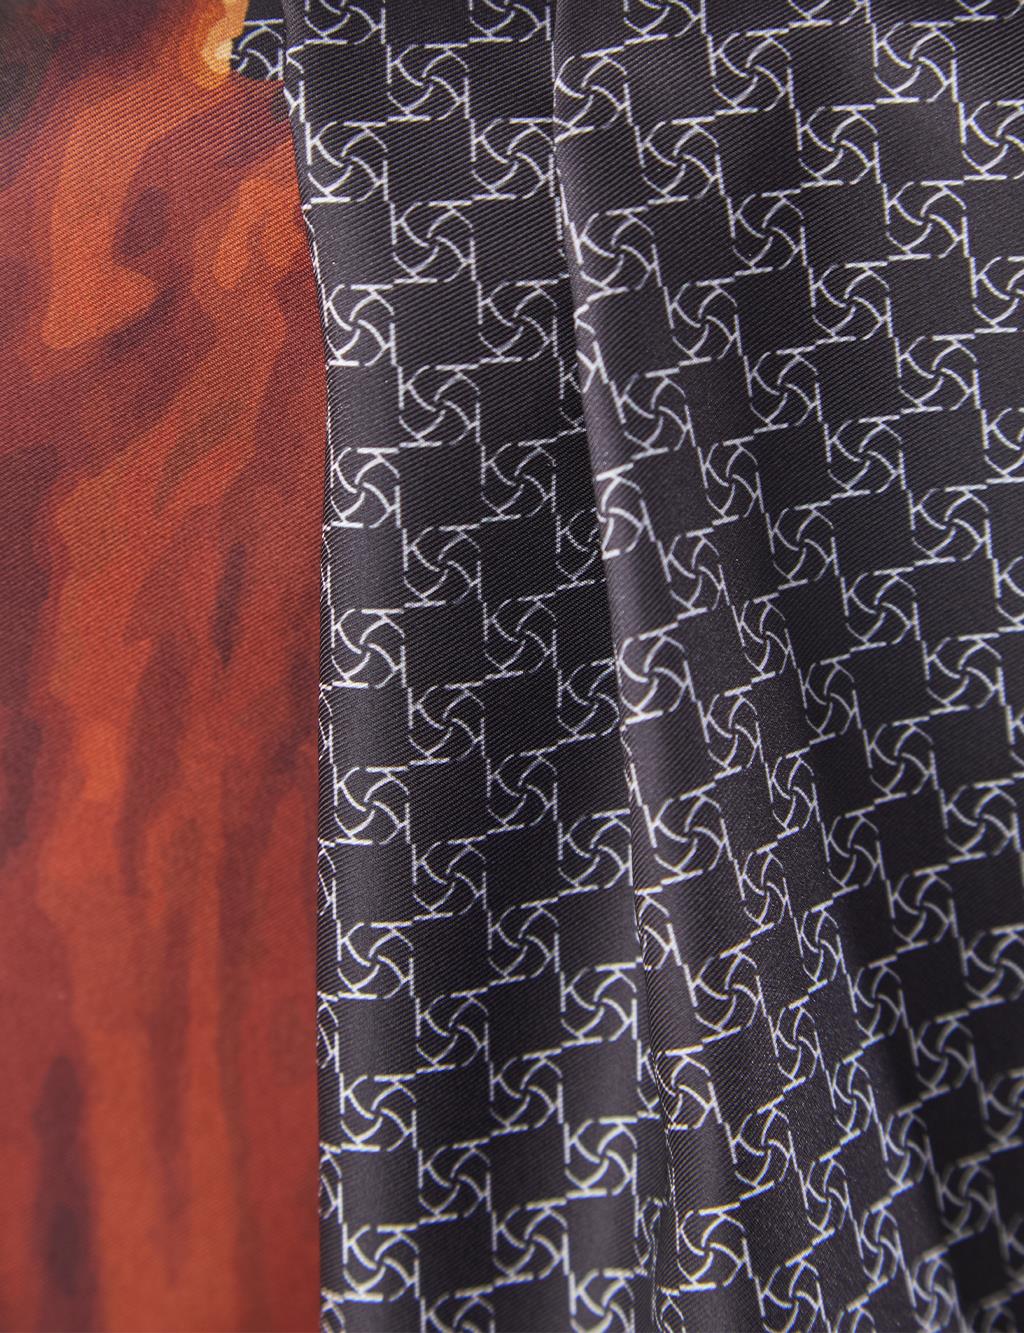 Framed Abstract Pattern Monogram Scarf Black-Orange